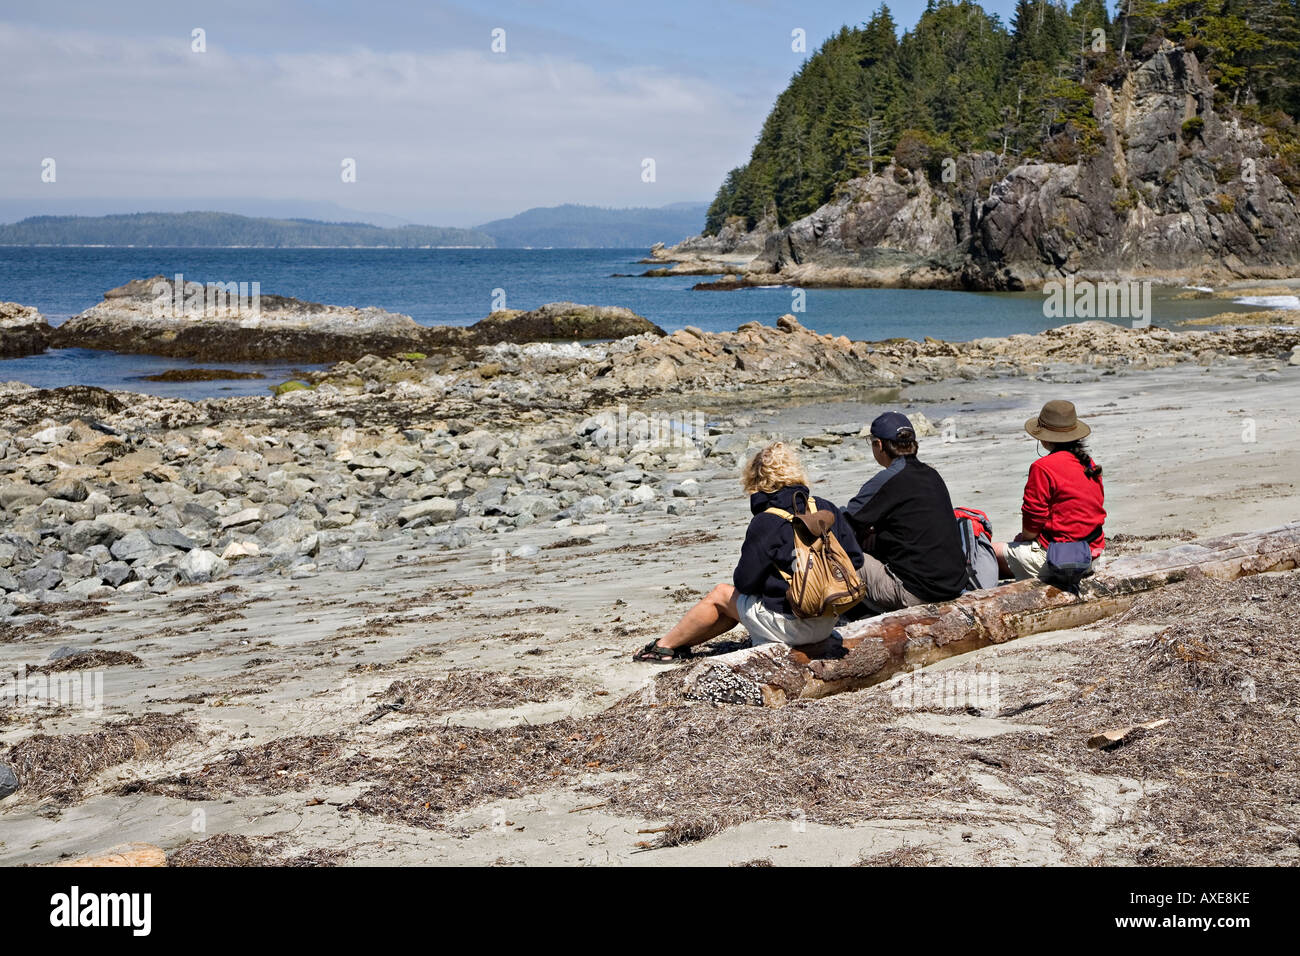 Three people sitting on beach Bamfirth west coast of Vancouver island Canada Stock Photo